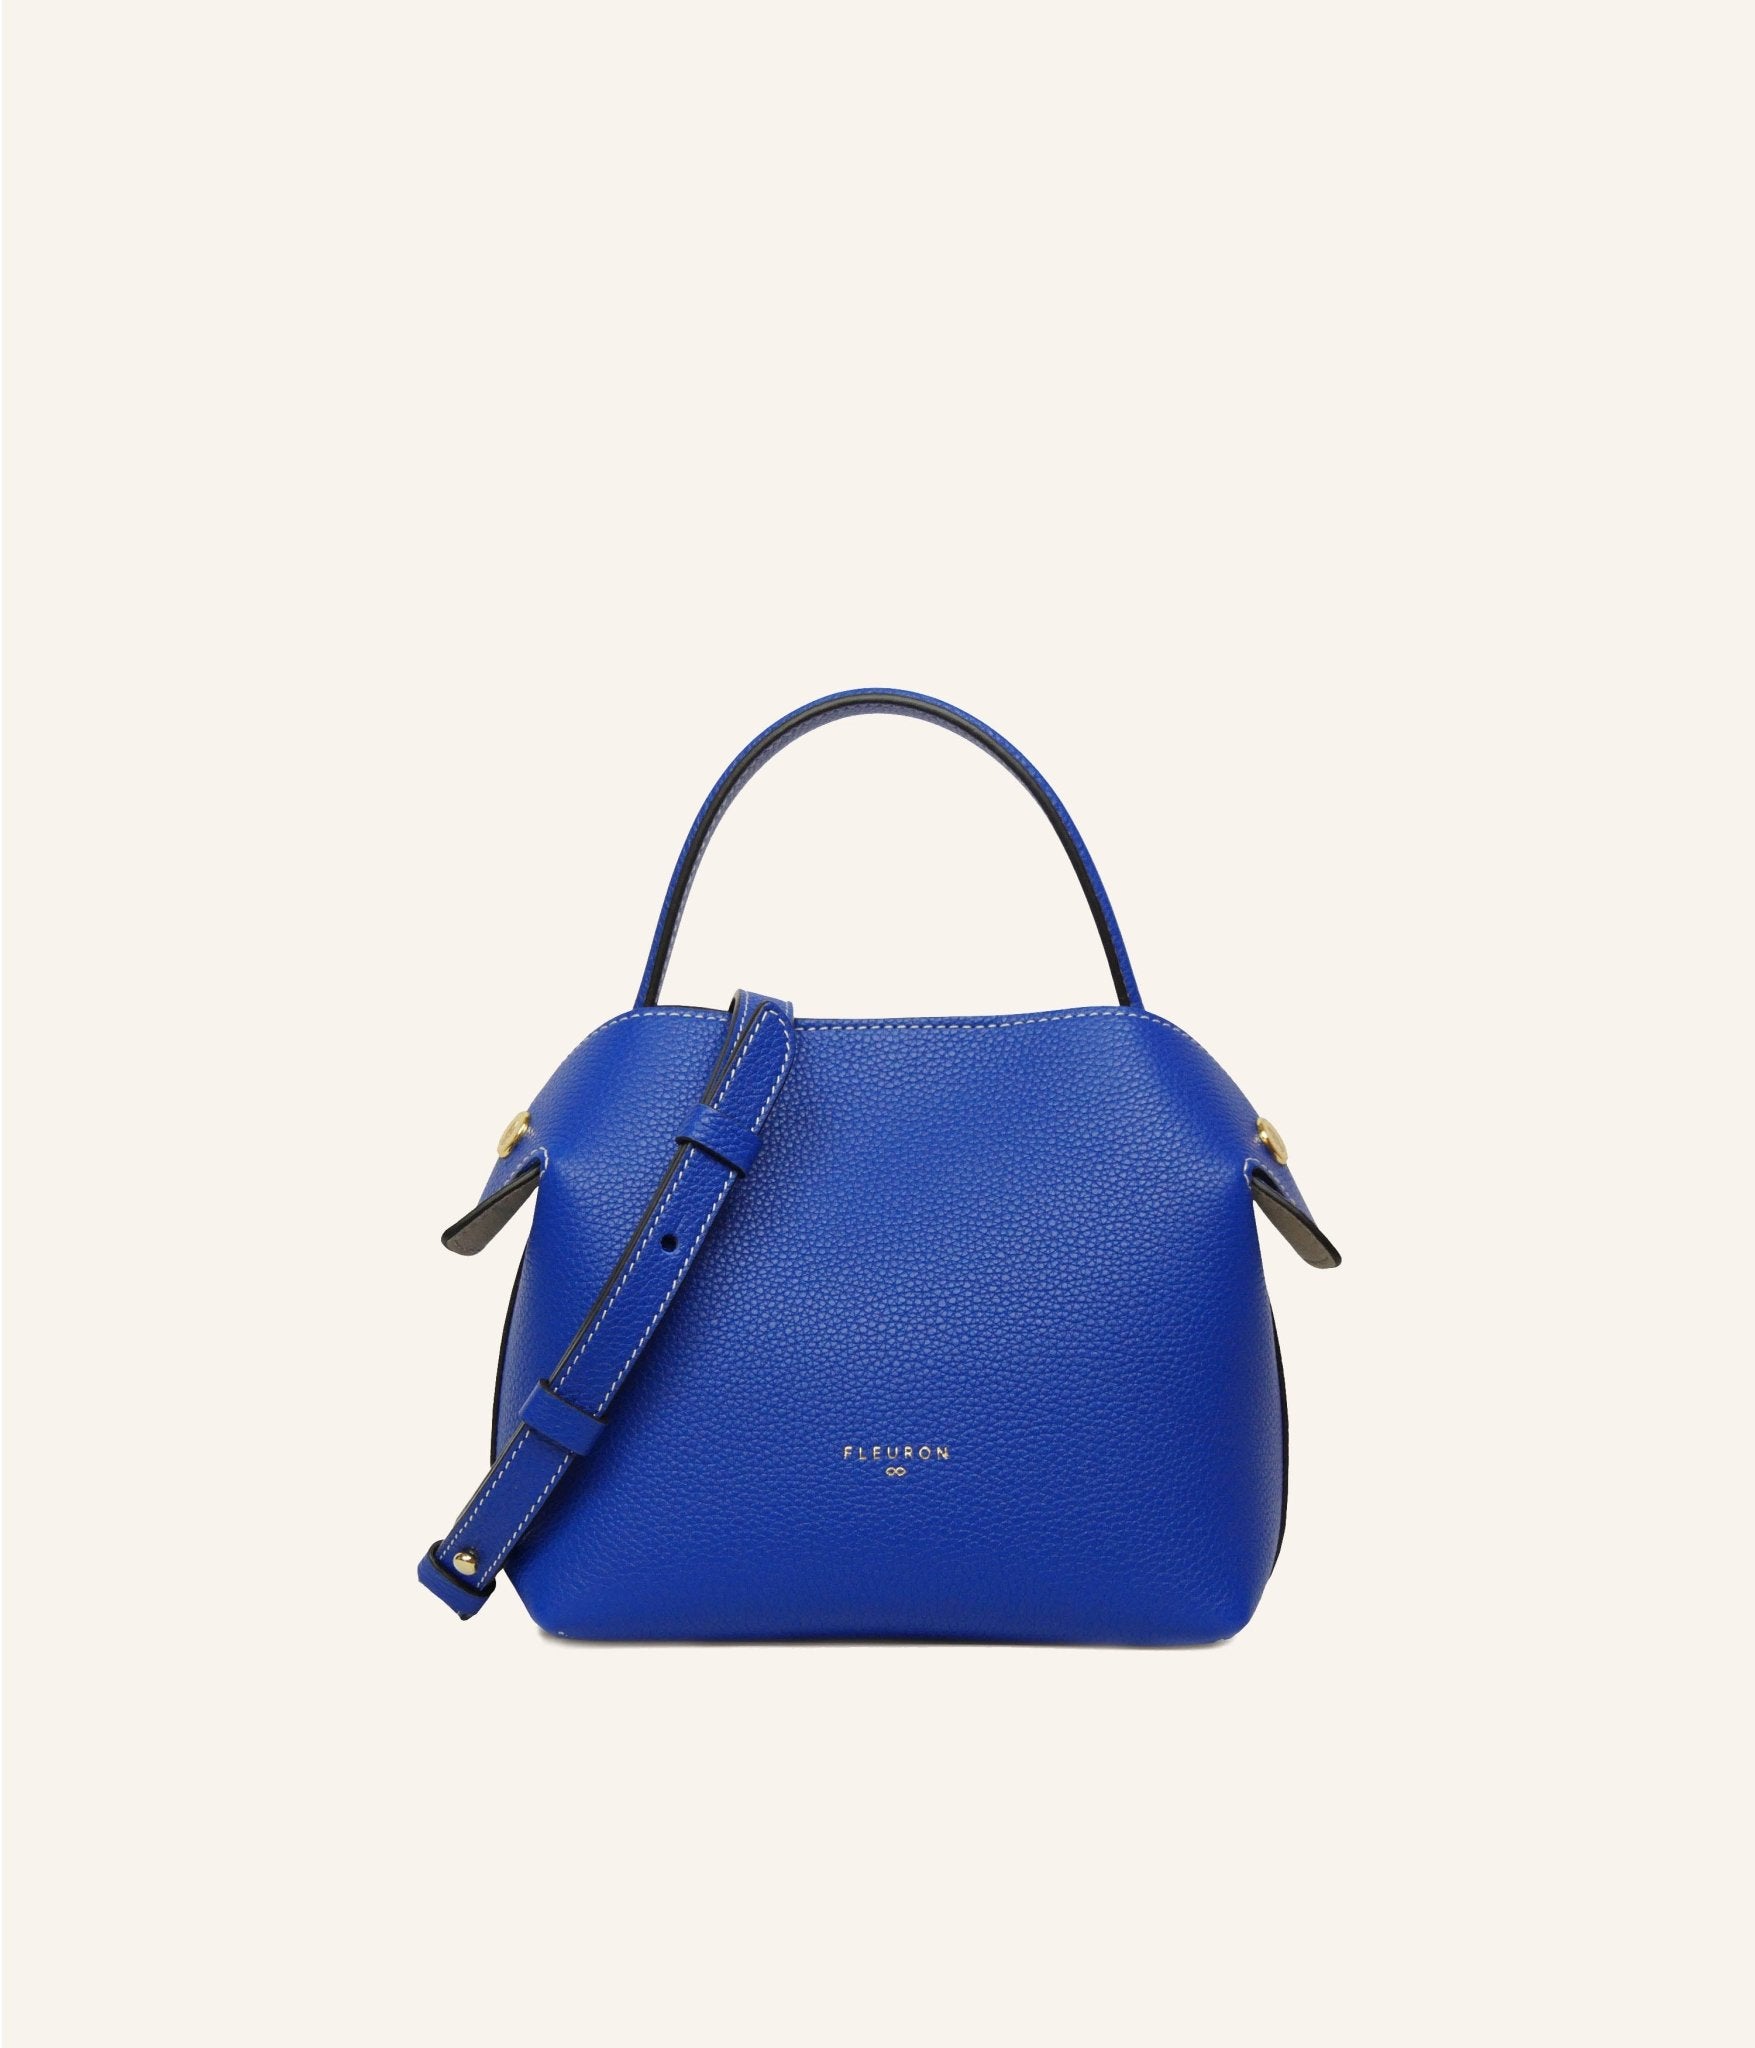 Buy BLOOM FASHION Stylish LV Sling bag handbag for womens/Girls